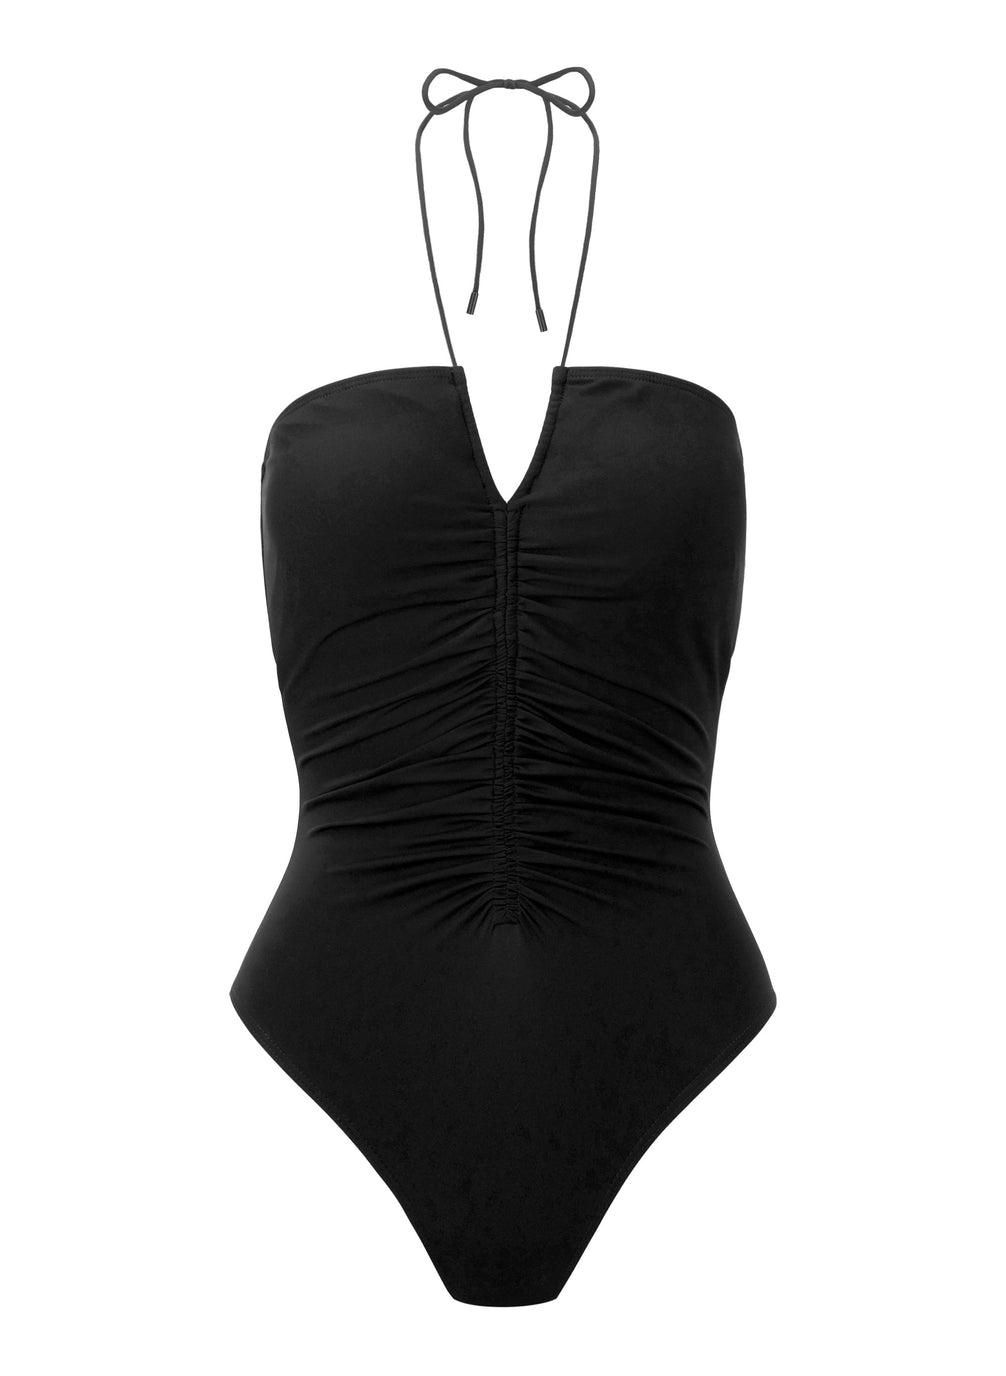 flatlay of black halter one piece swimsuit